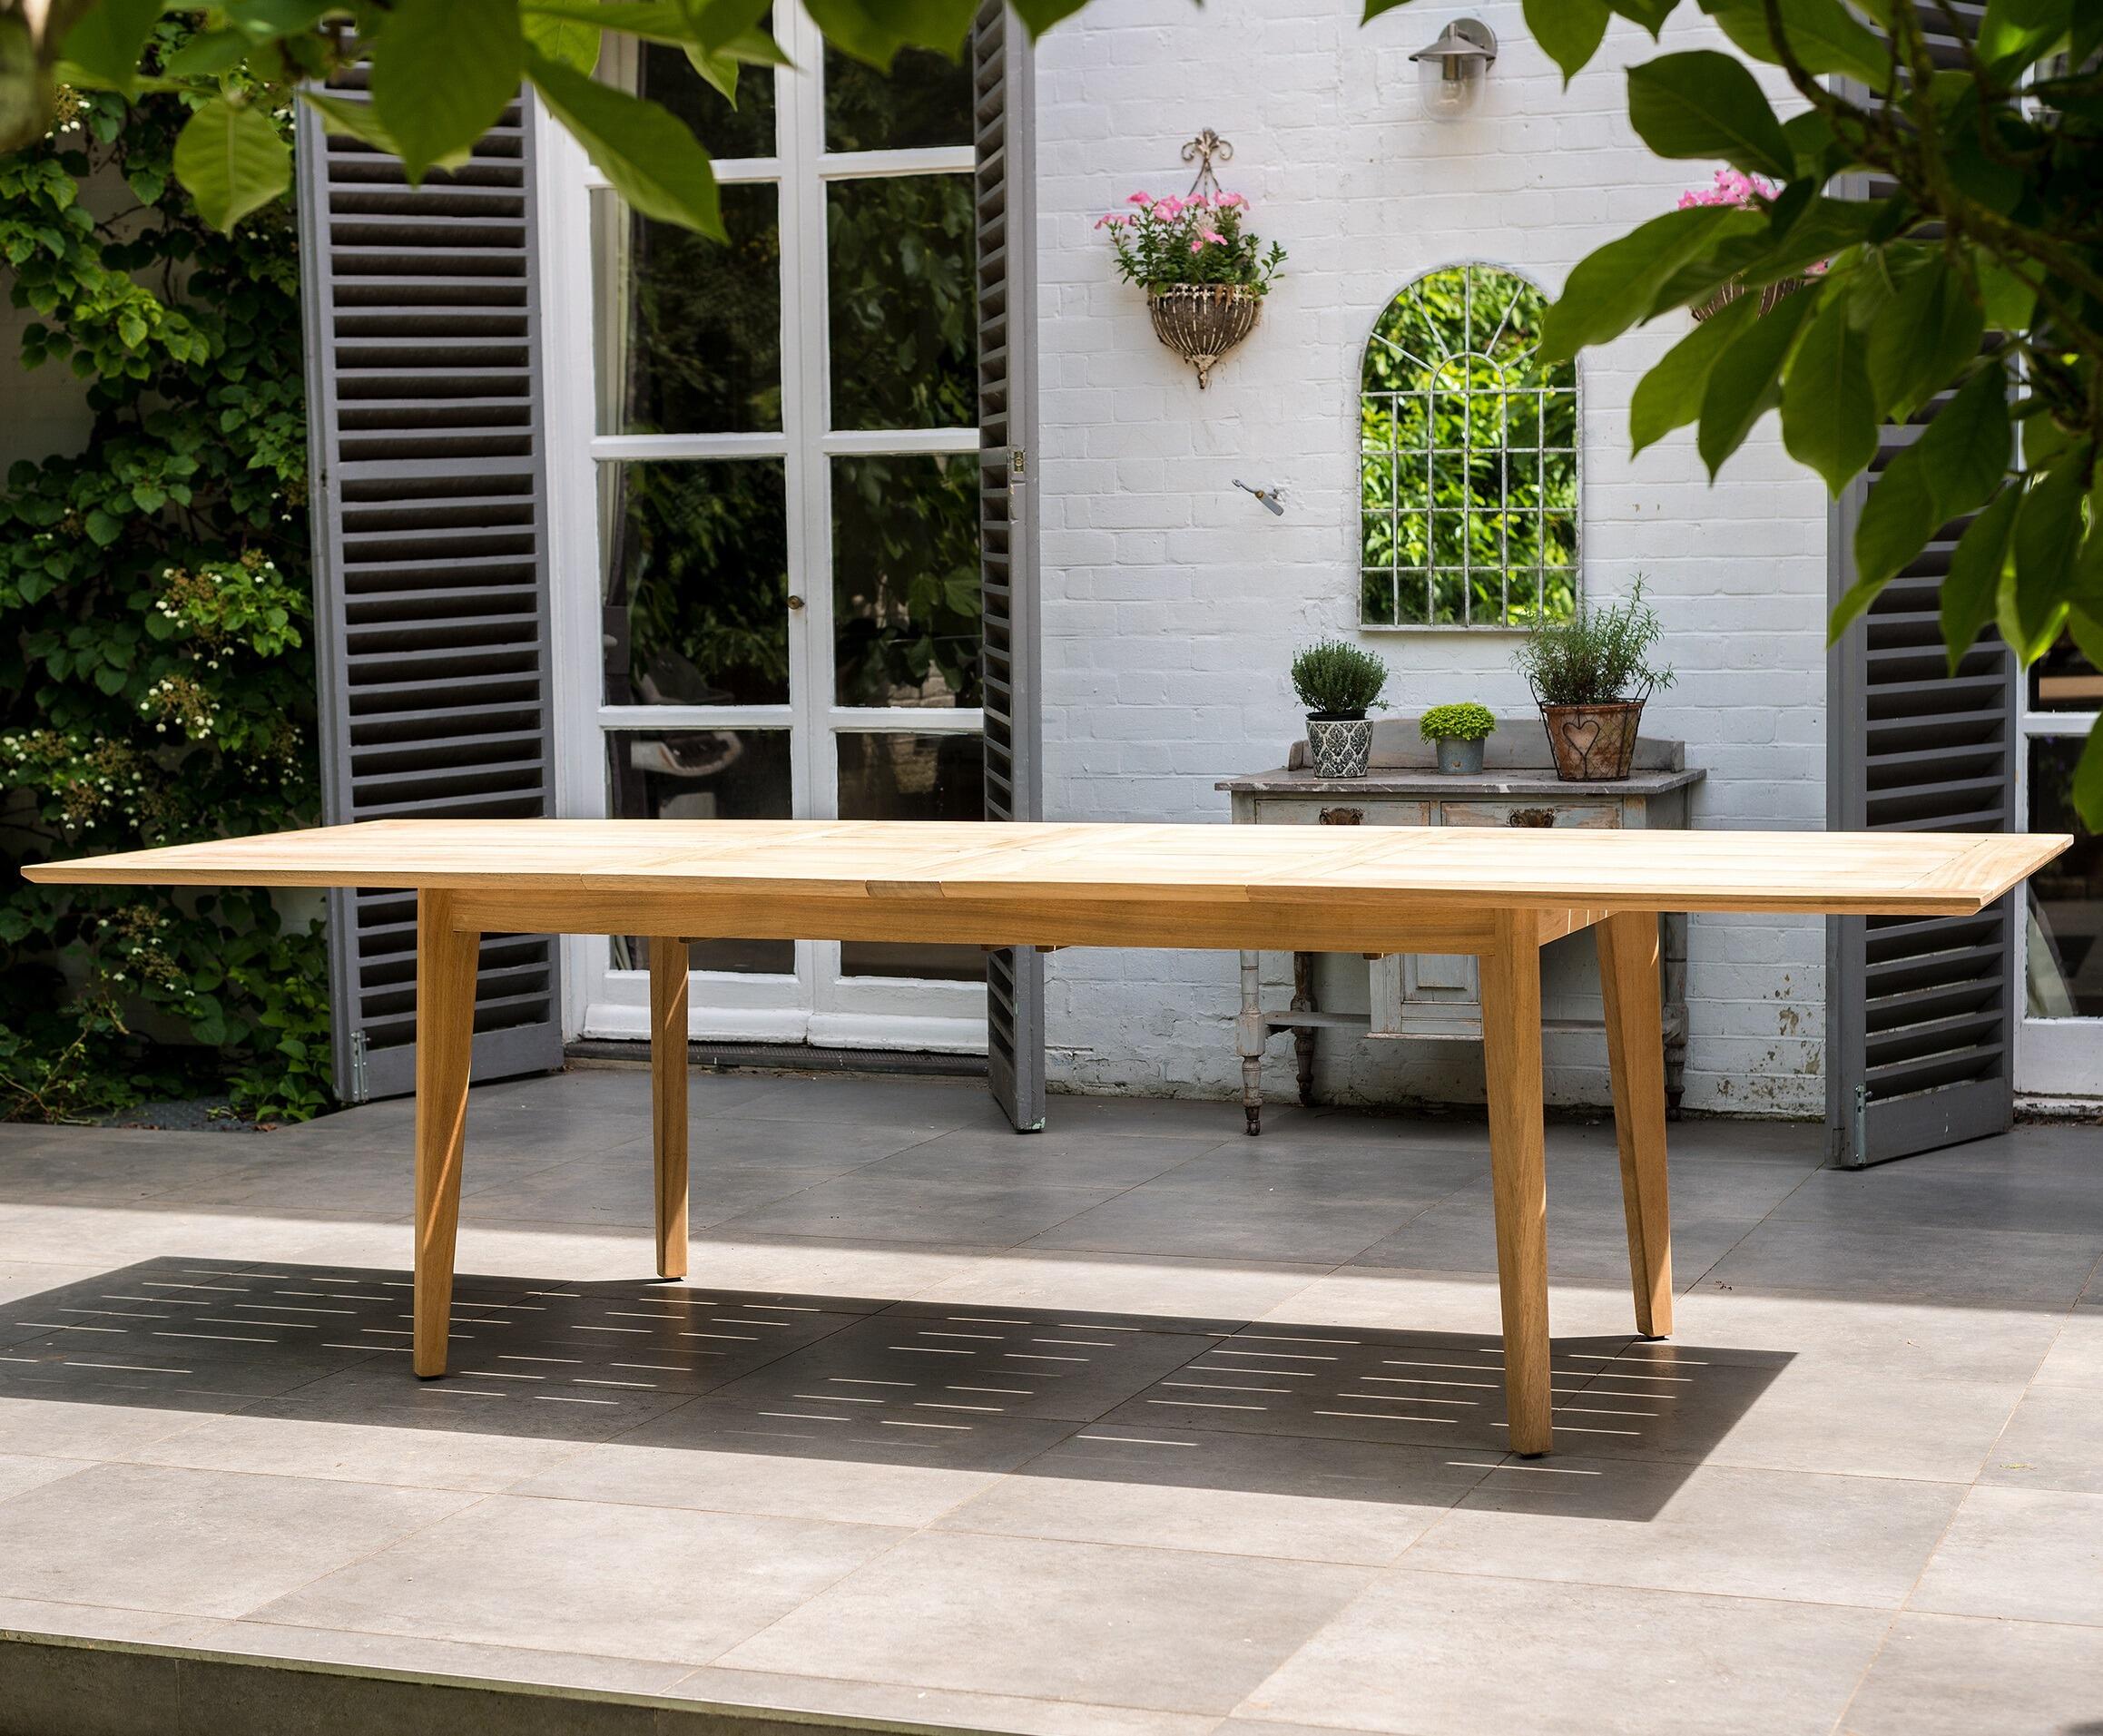 2.7 m extended garden dining table in roble hardwood modern design high grade wood